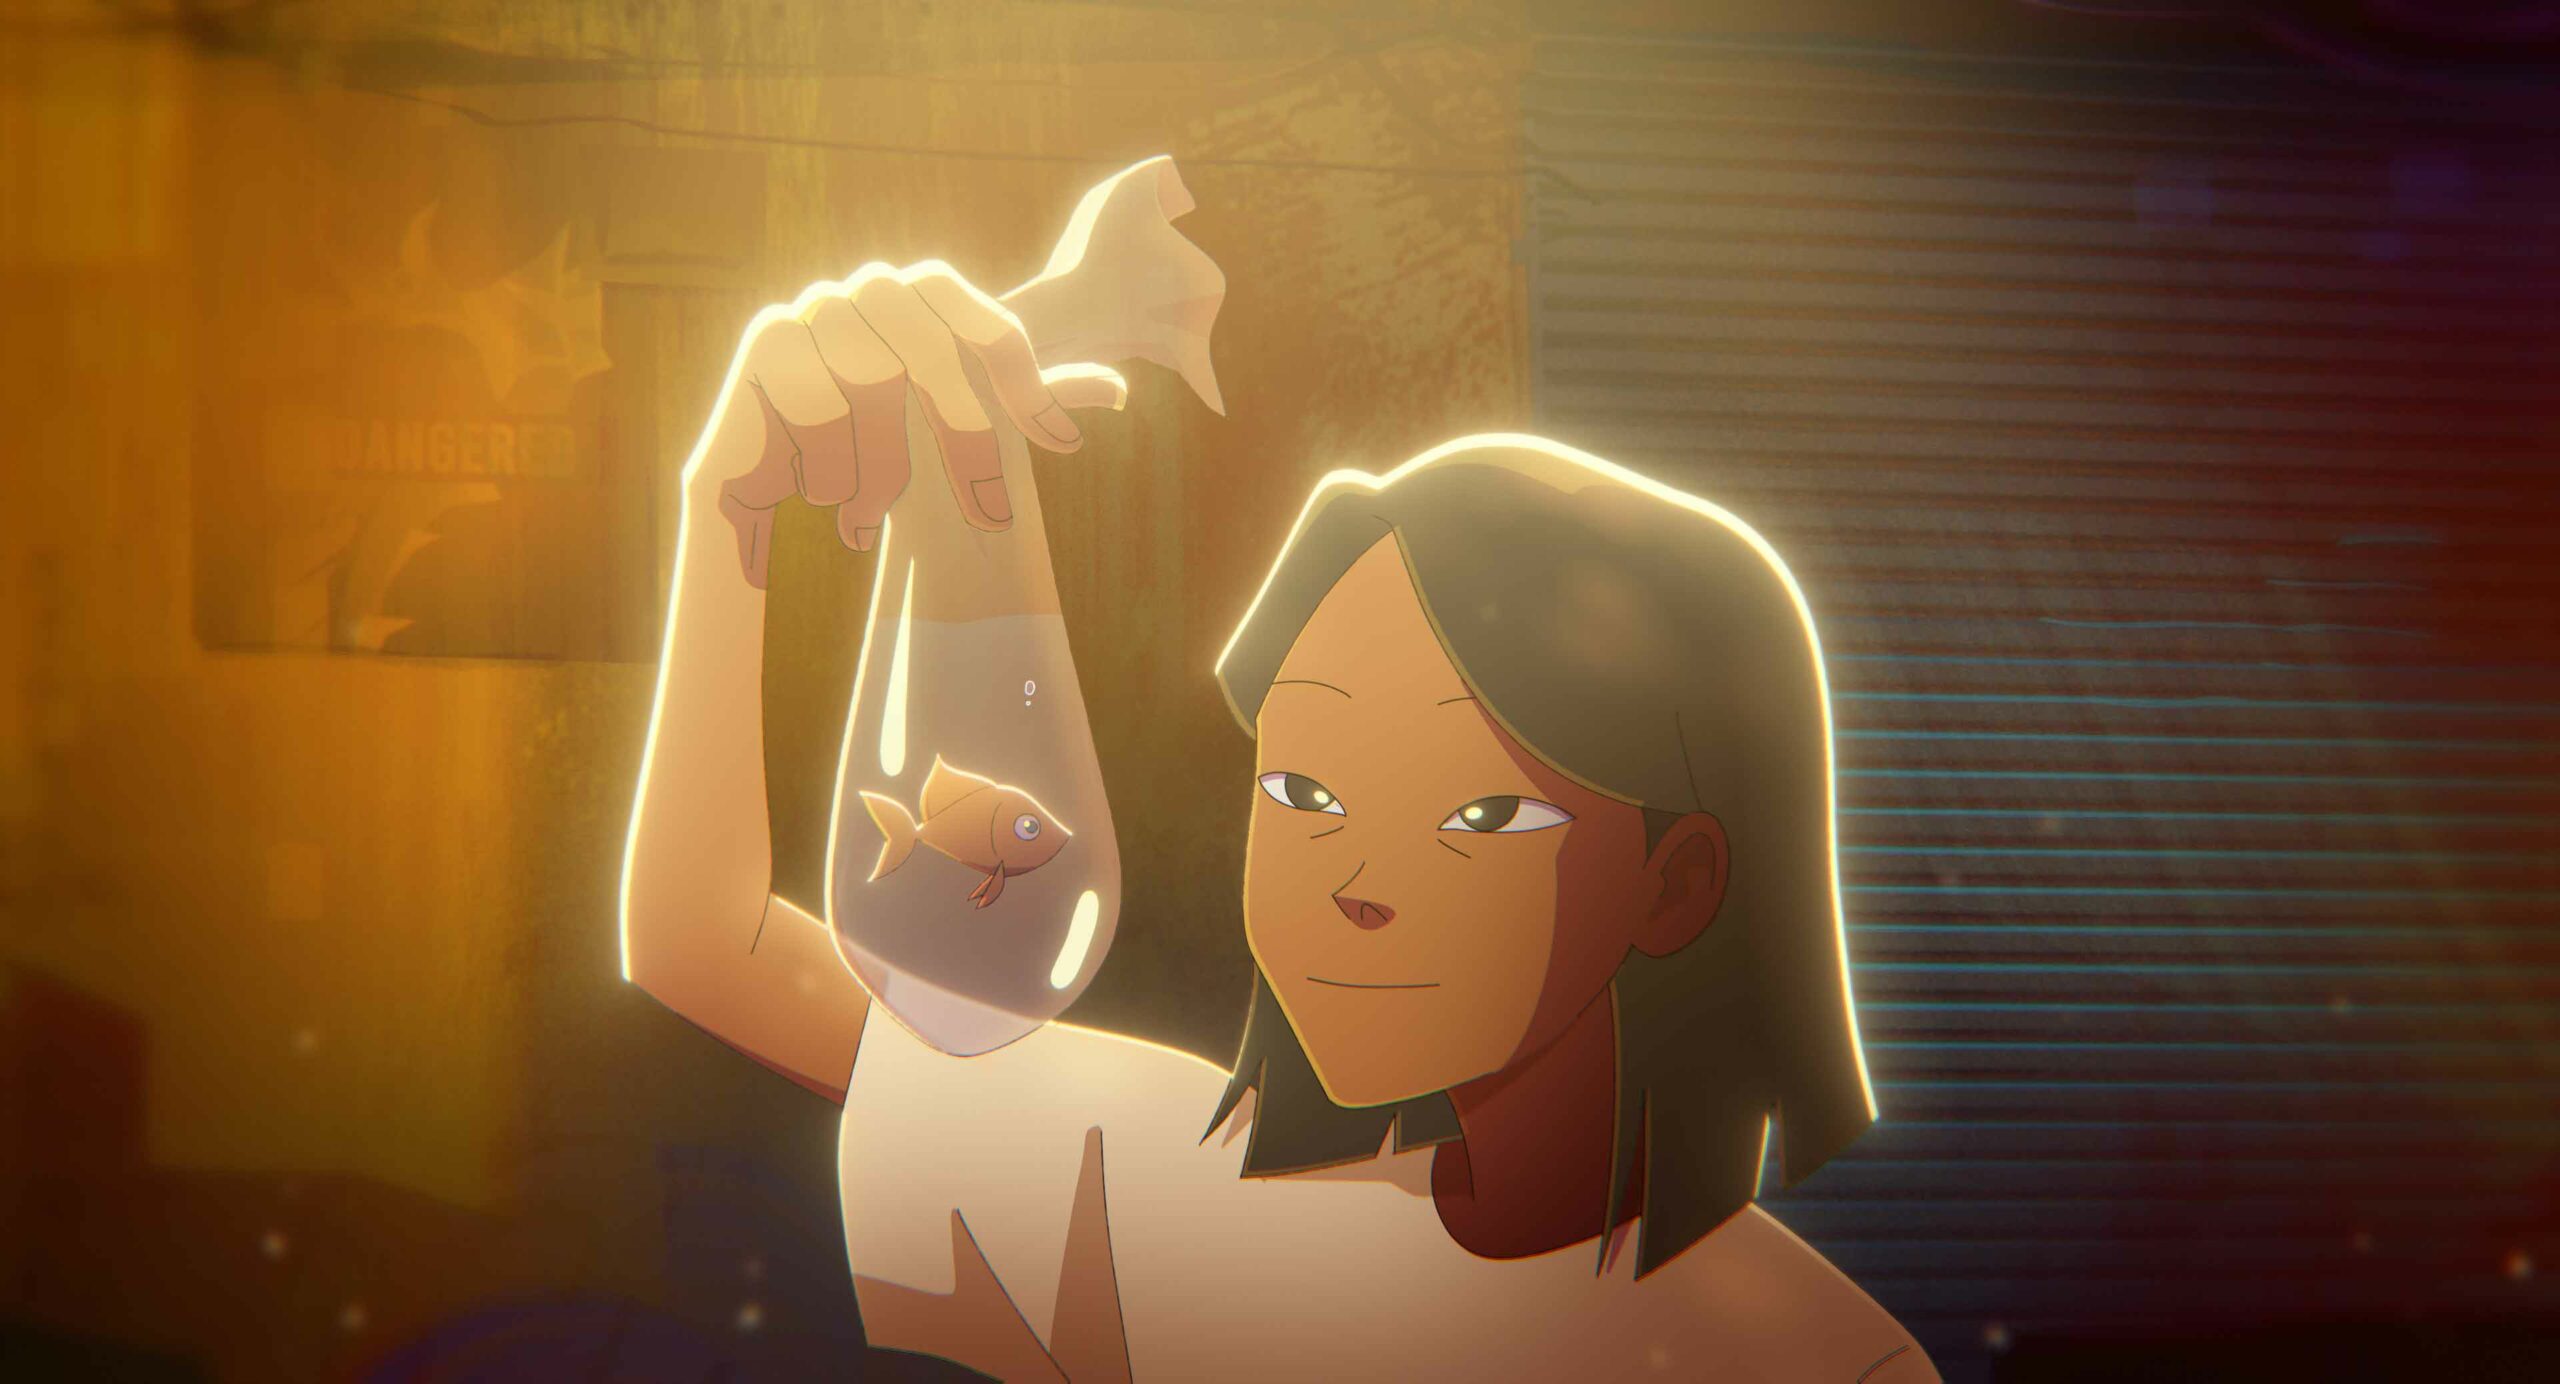 The Lovers animated film set in the Philippines Binondo